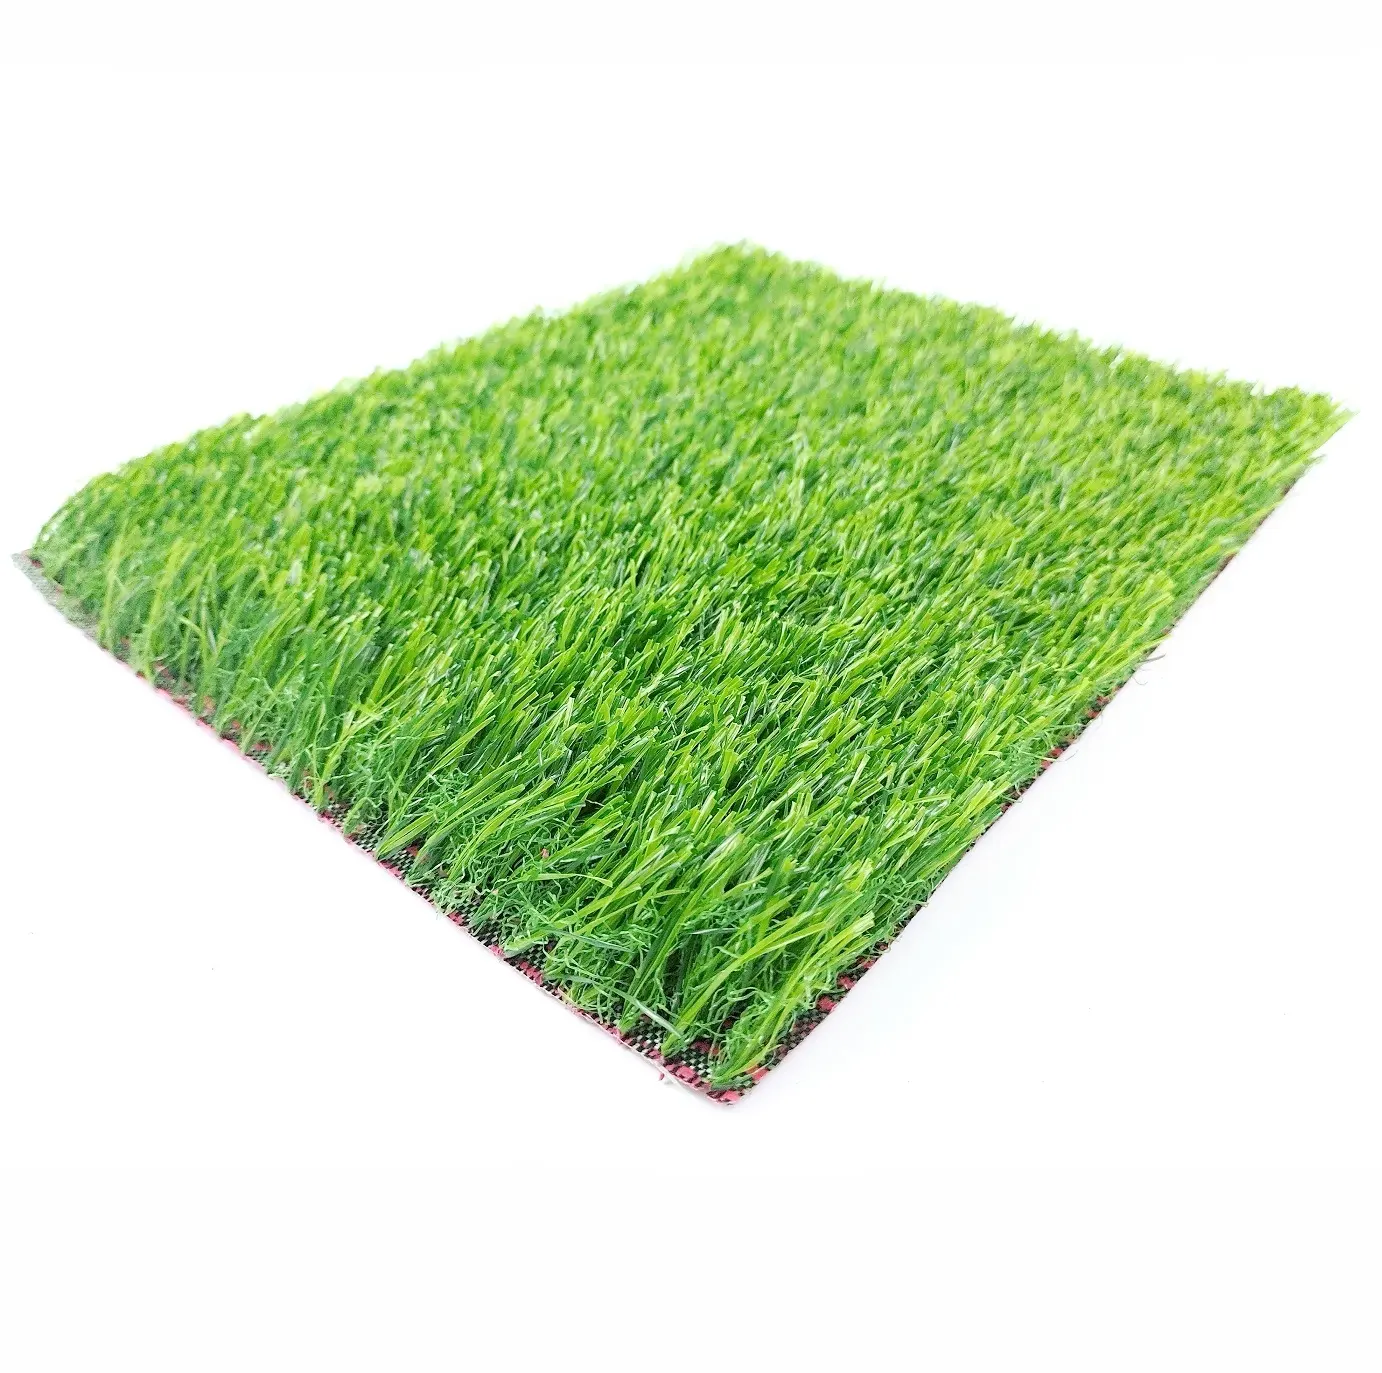 Tapete de entrada verde artificial para futebol, sintético, de plástico, gramado, para casamento